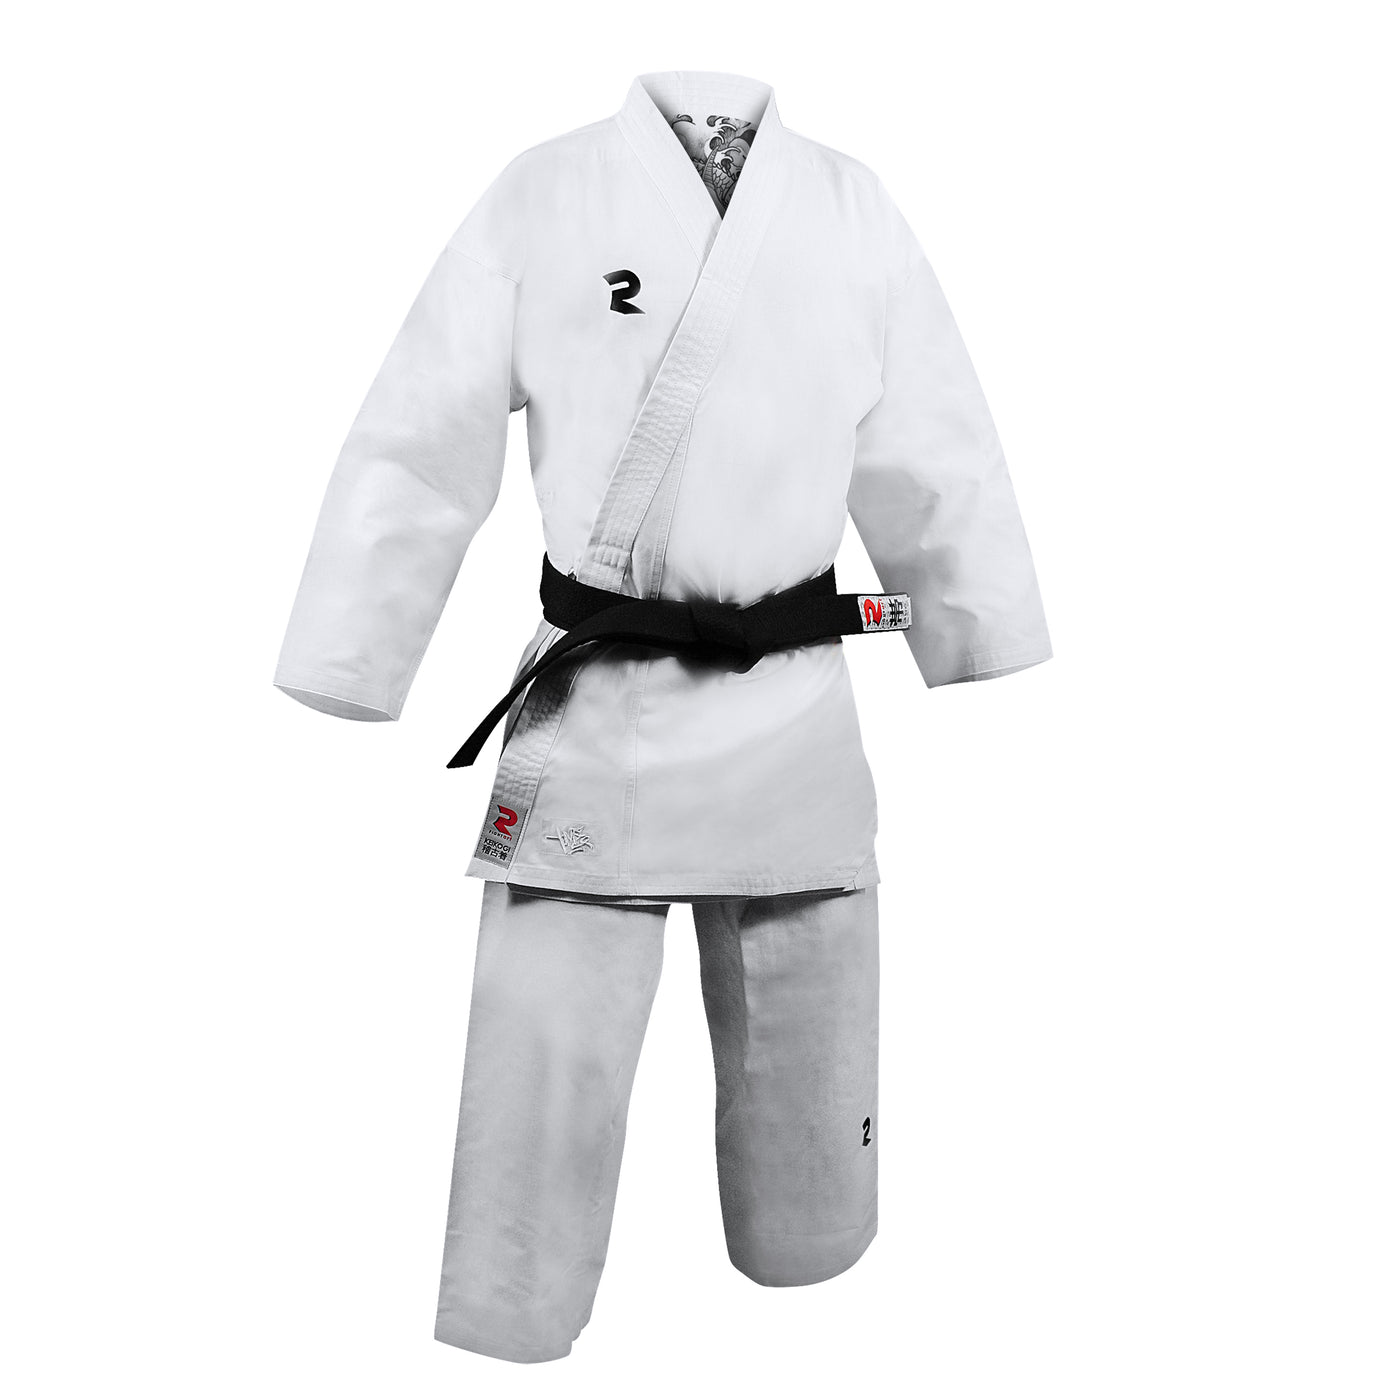 Karate Training Kimono - Keikogi Limited Edition (Yome)